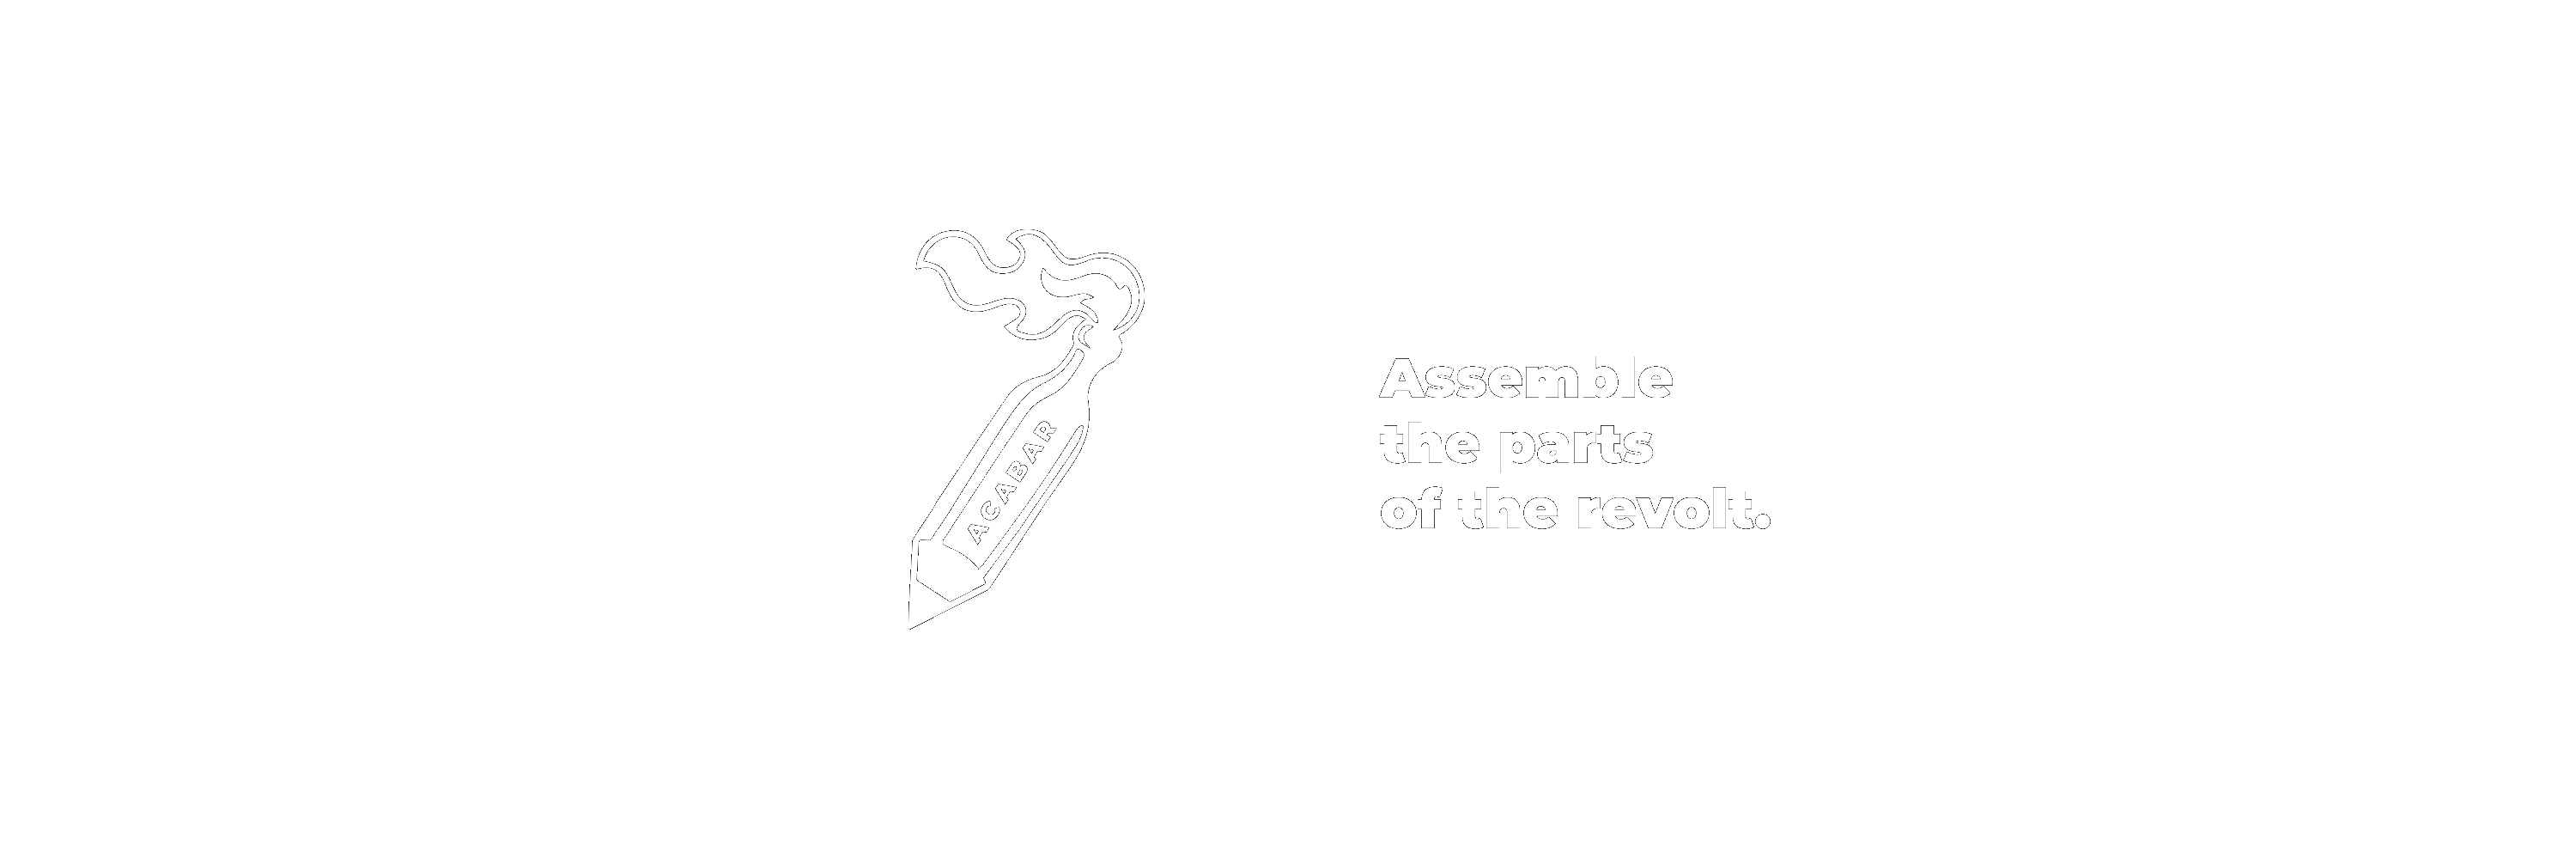 Assemble the parts of the revolt